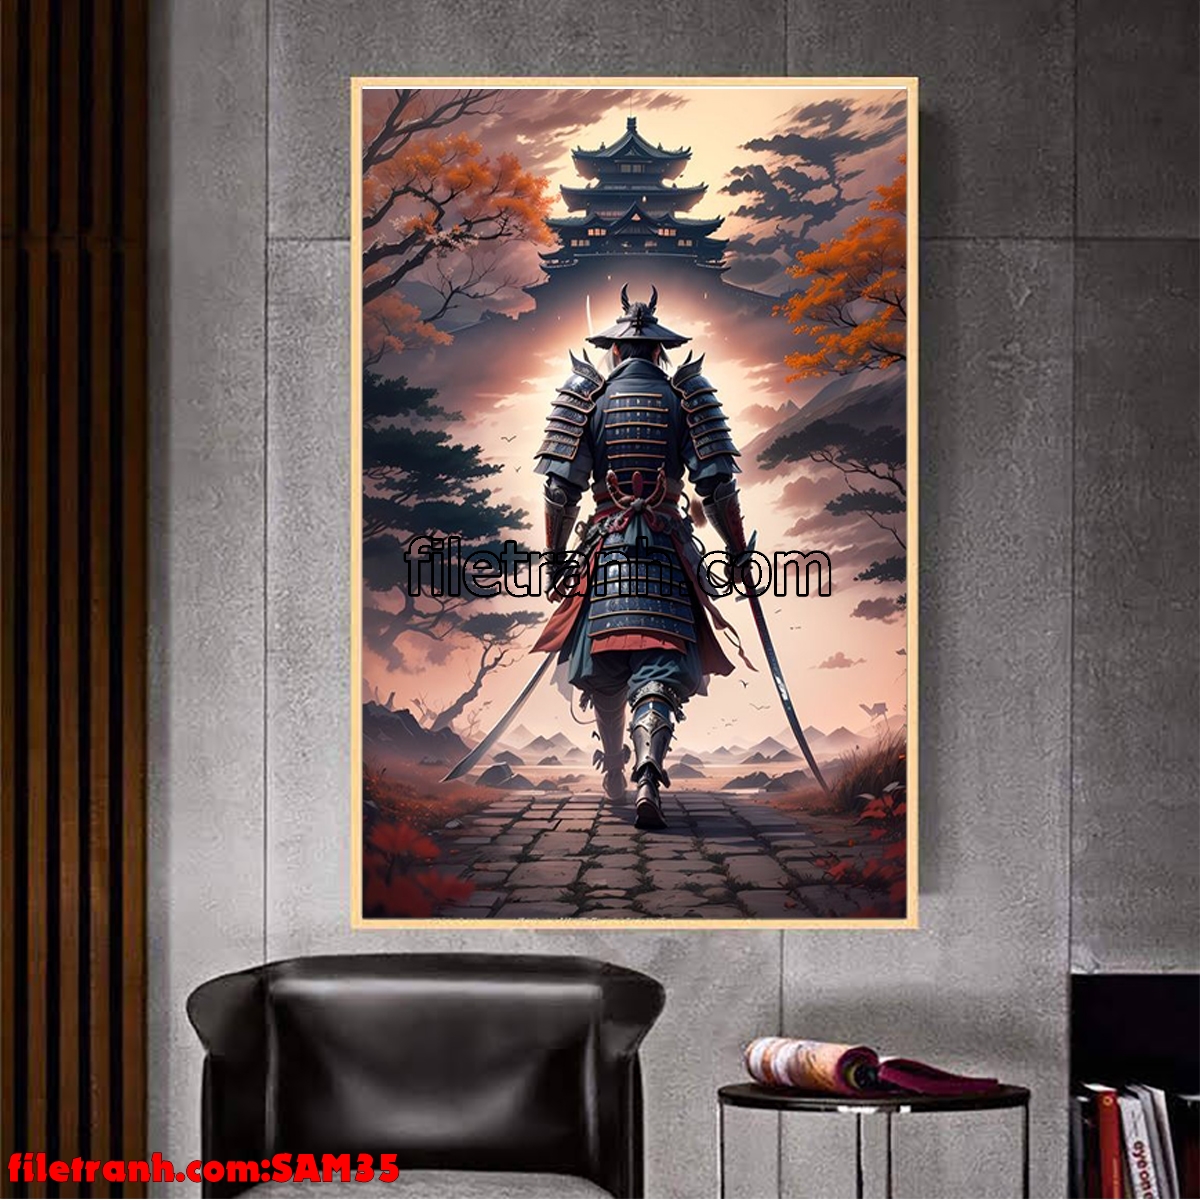 https://filetranh.com/samurai/file-tranh-samurai-vo-si-nhat-ban-sam35.html